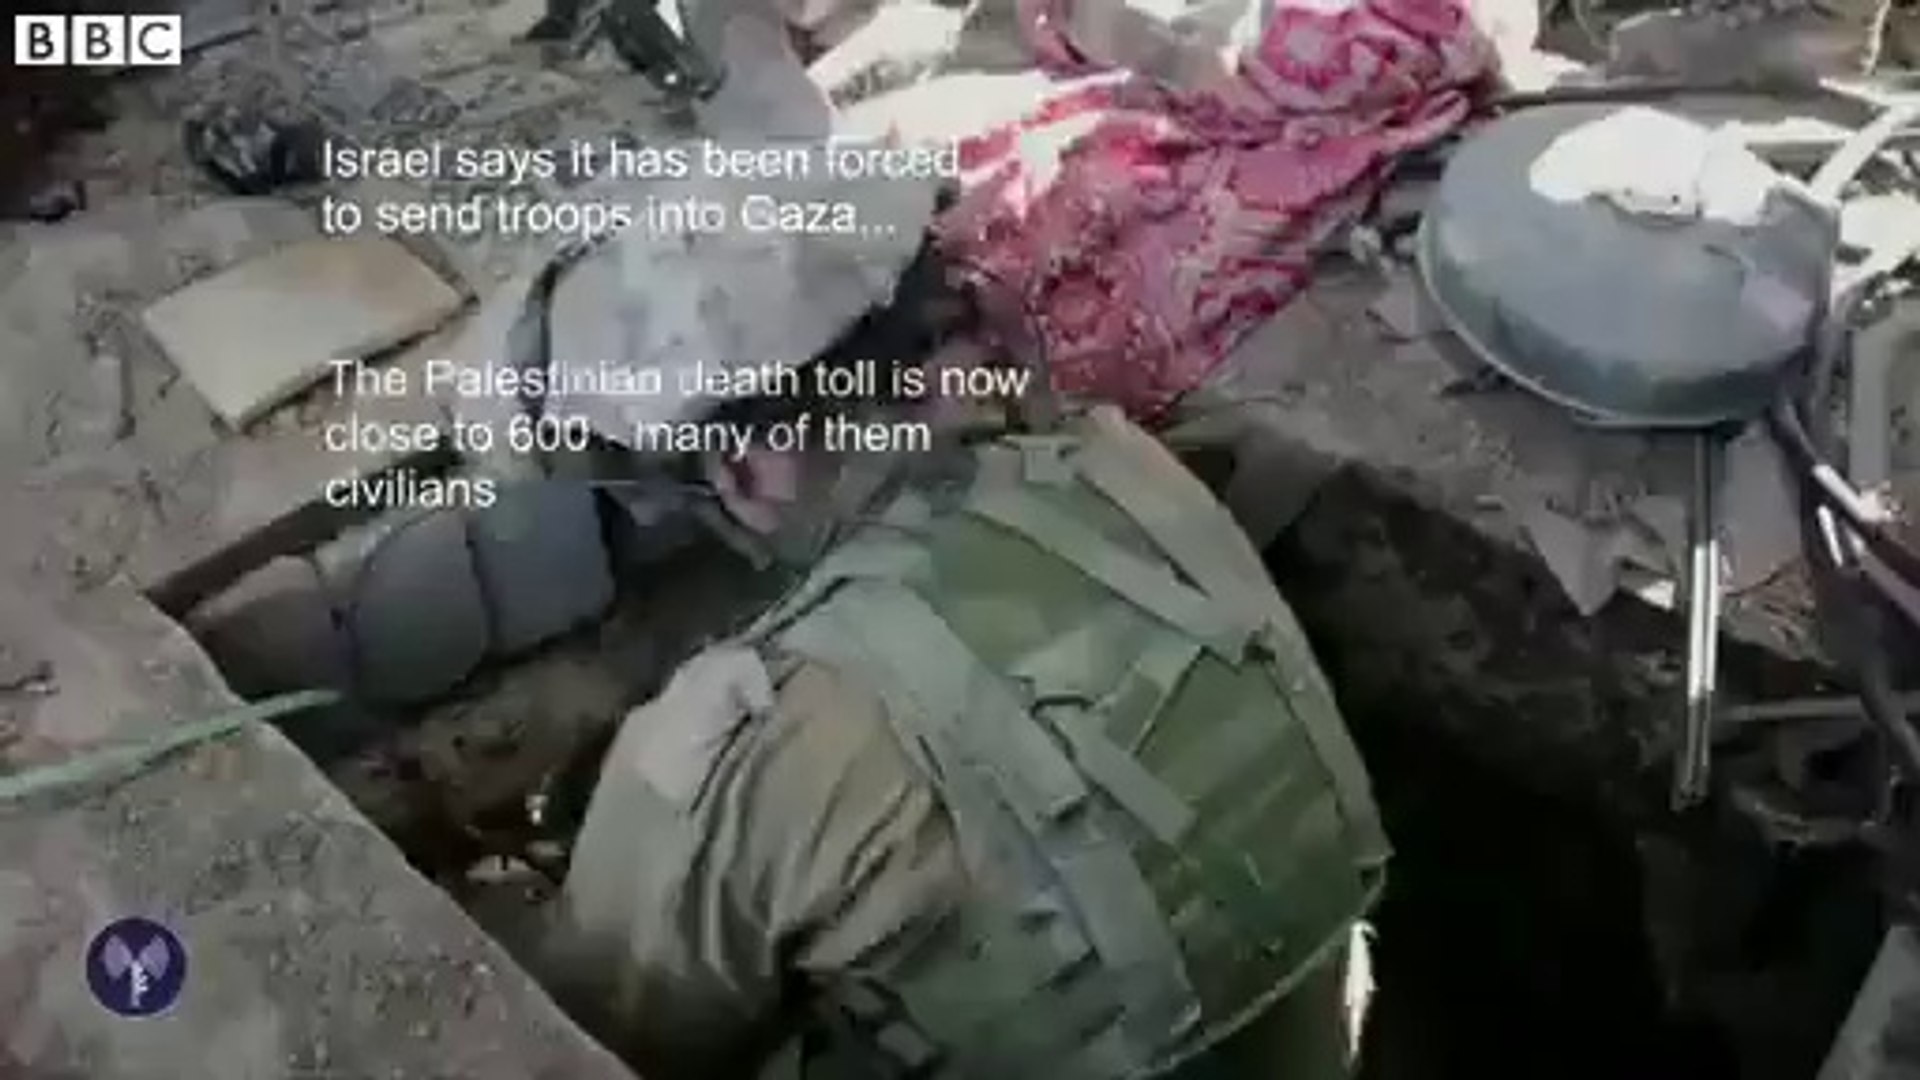 How Palestine Killed Israel Soldiers - 21/07/2014 Source: B.B.C News